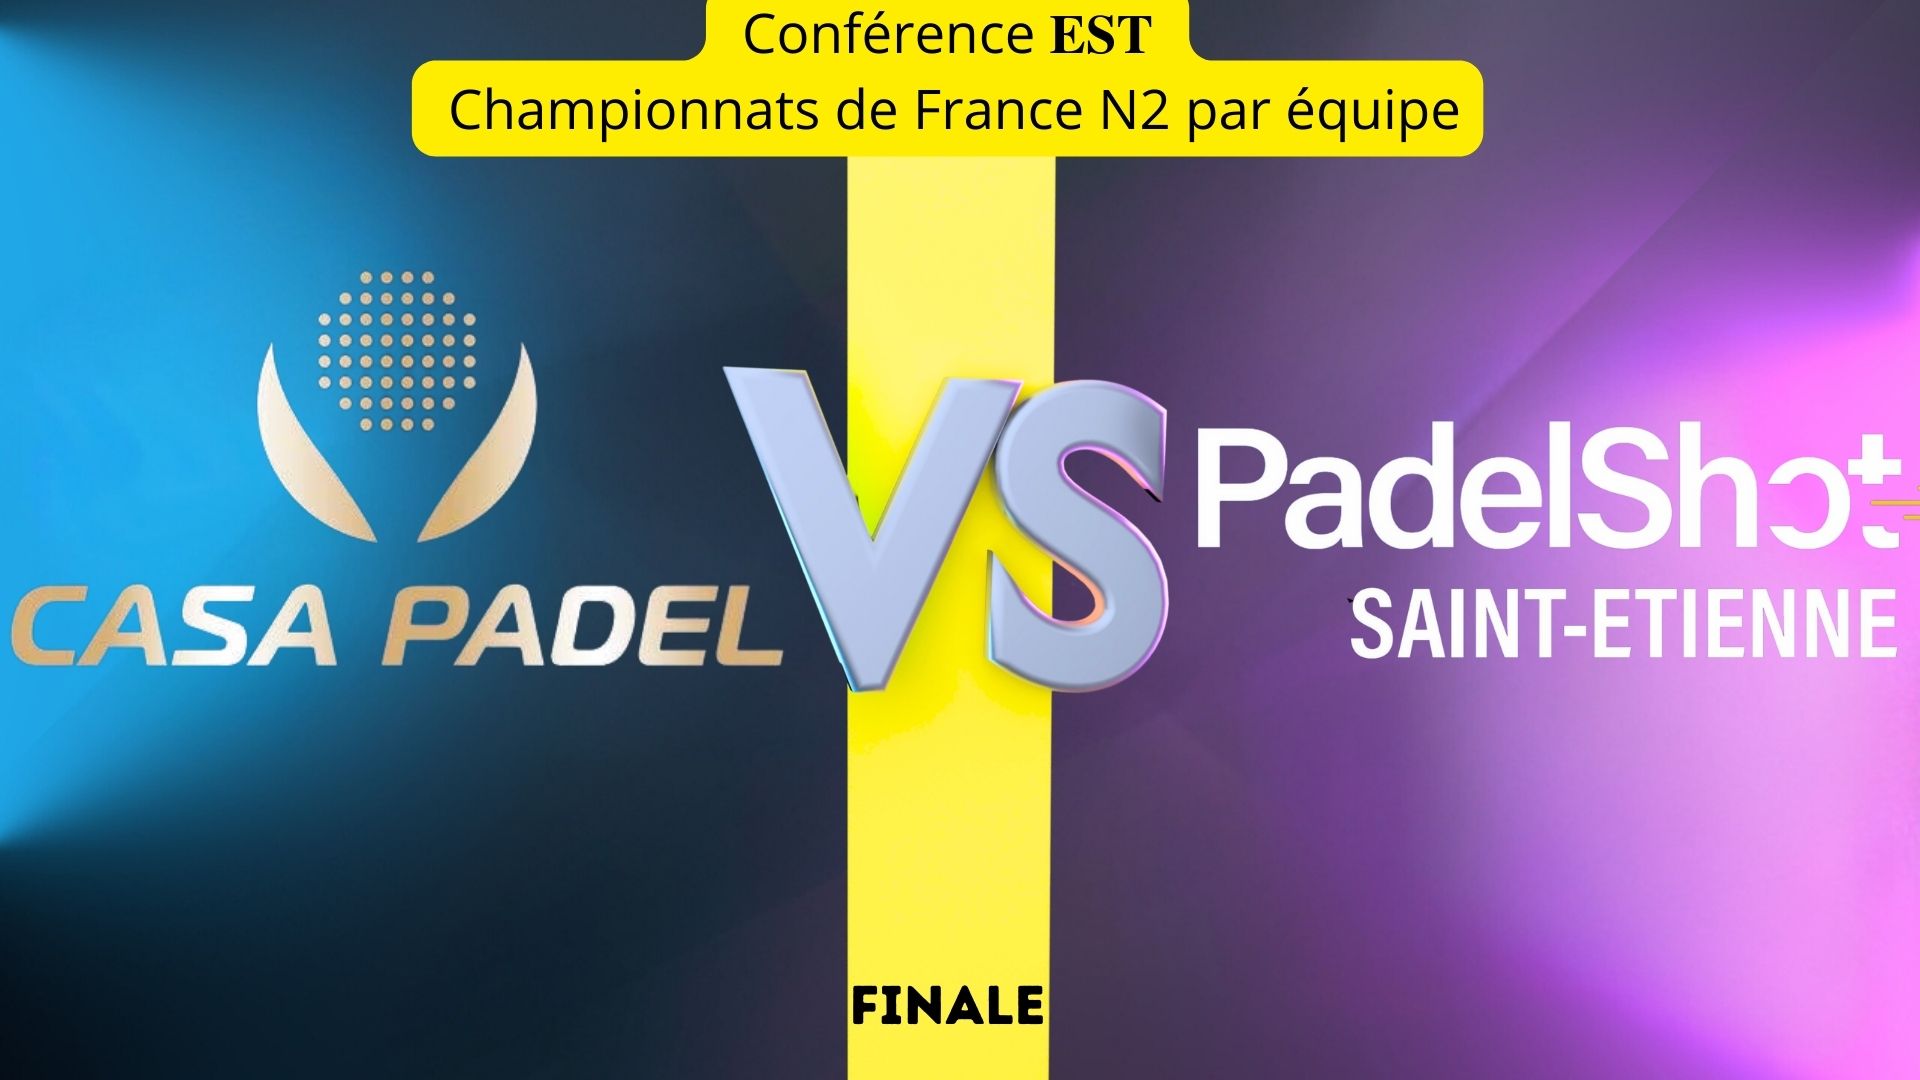 Ostfinale: Casa Padel vs PadelSchuss Saint-Etienne